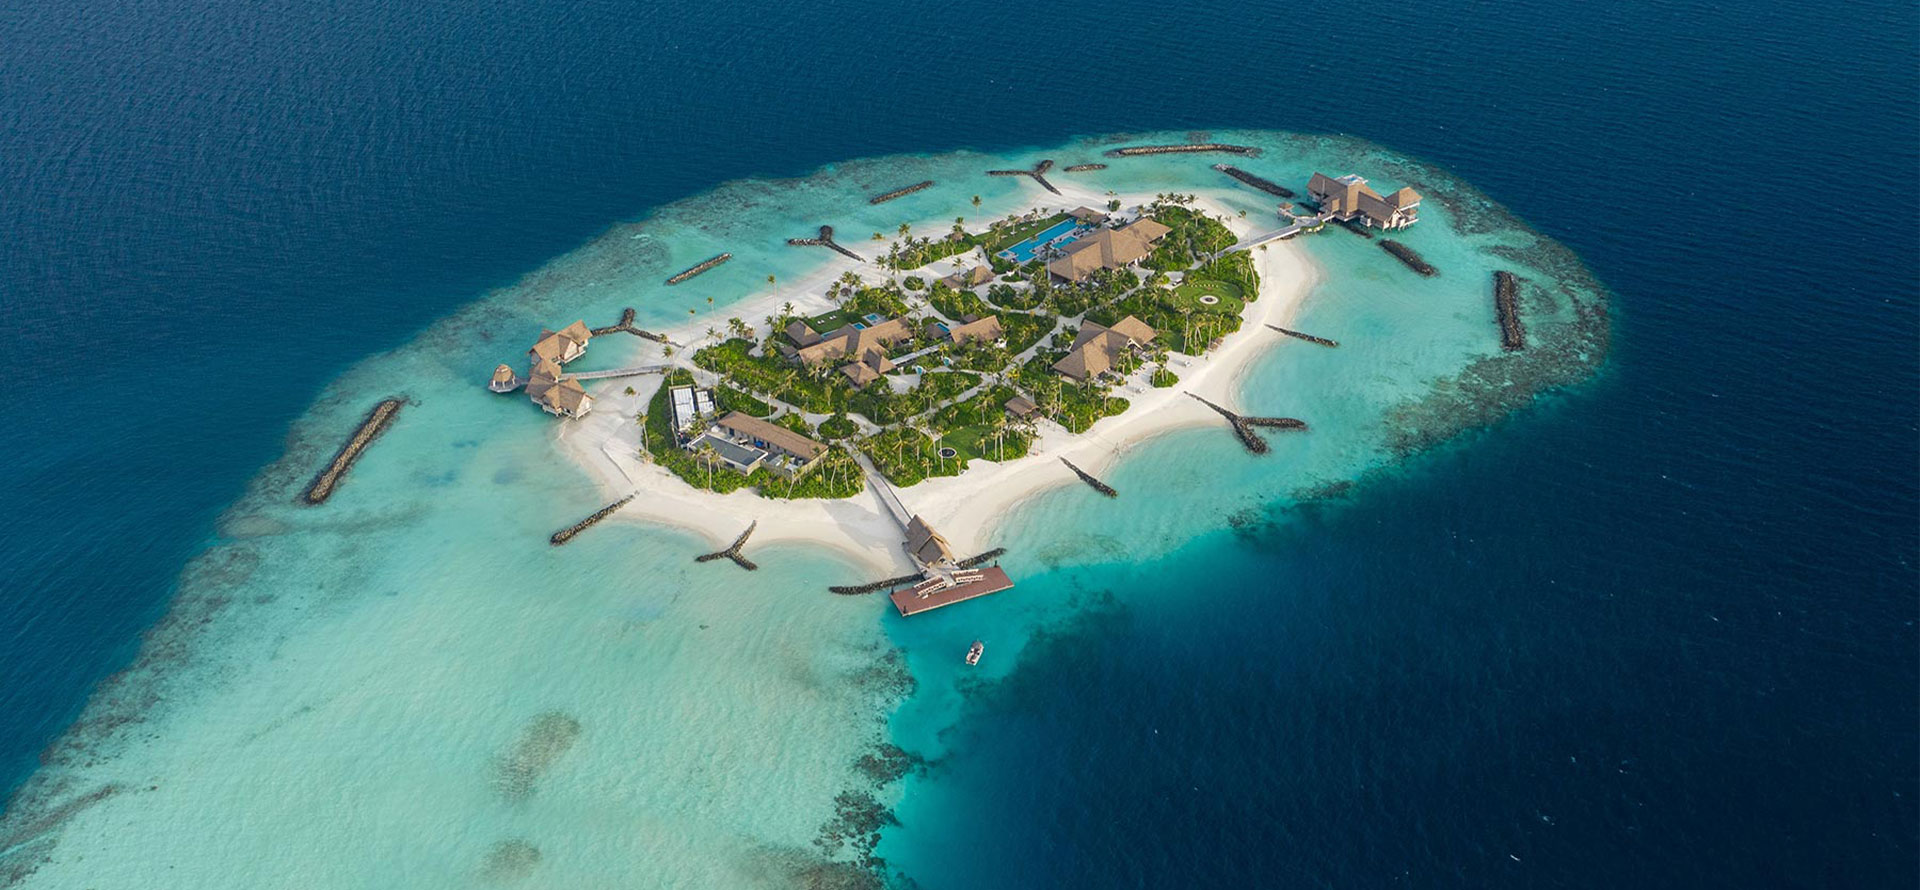 Maldives honeymoon beautiful island.